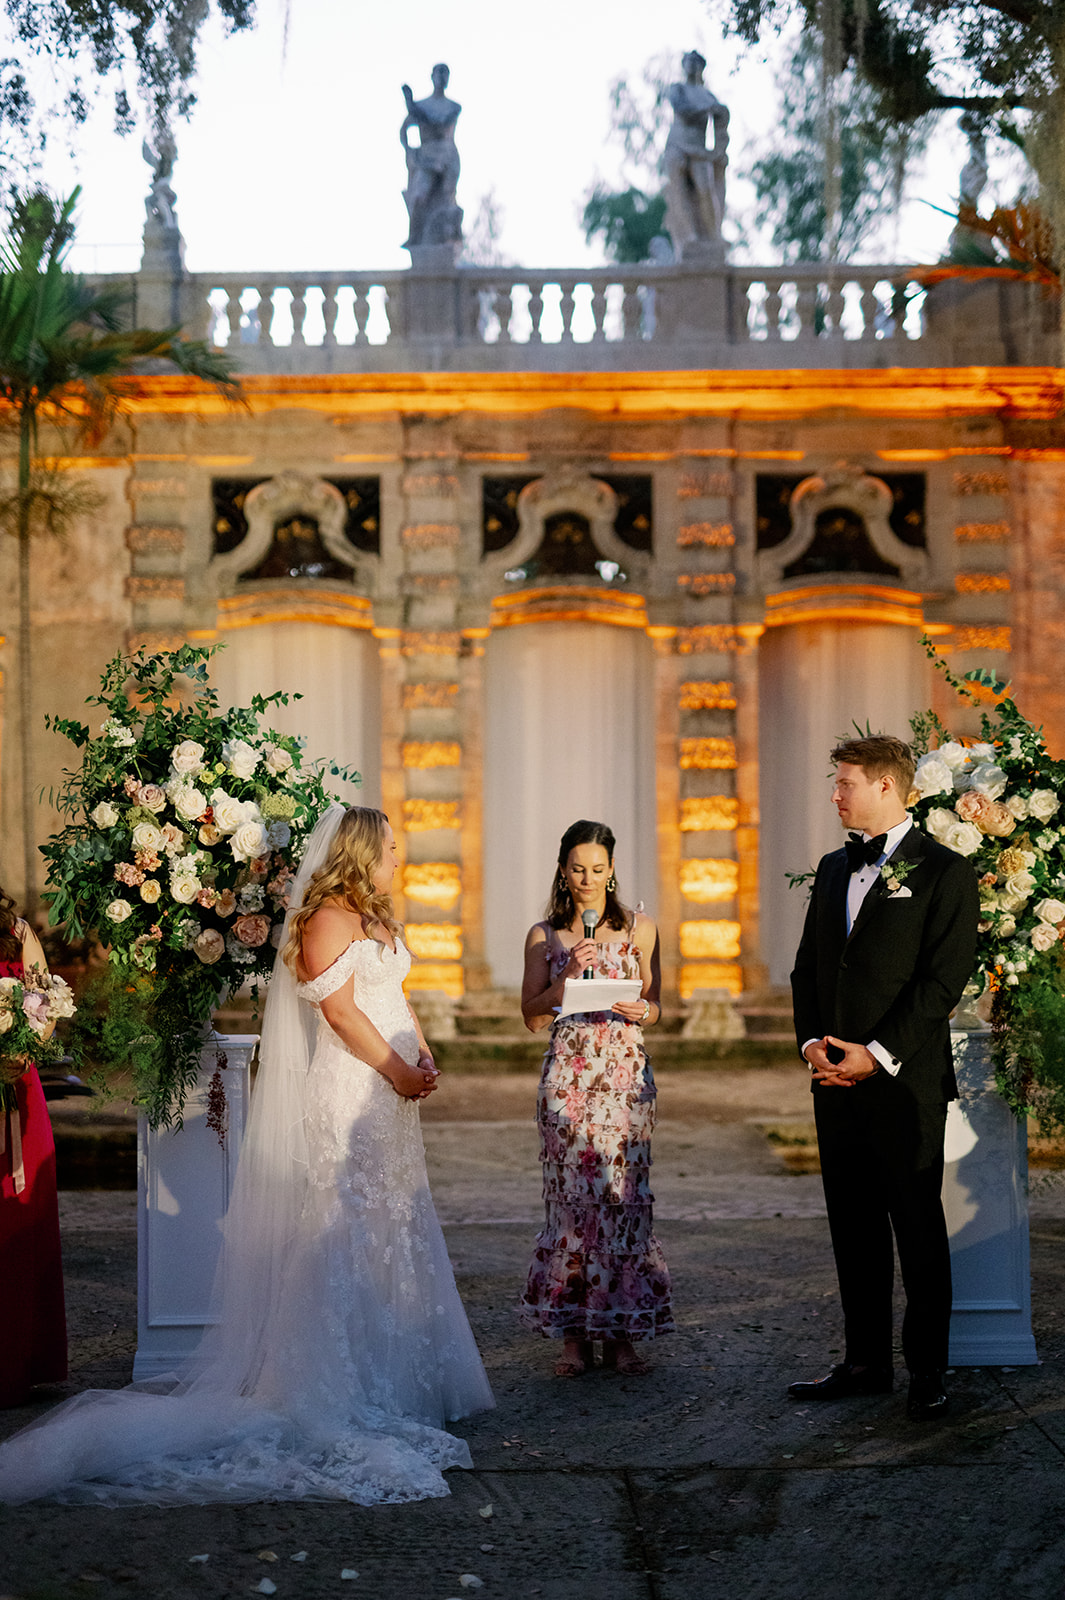 Vizcaya Museum & Gardens sunset wedding ceremony.